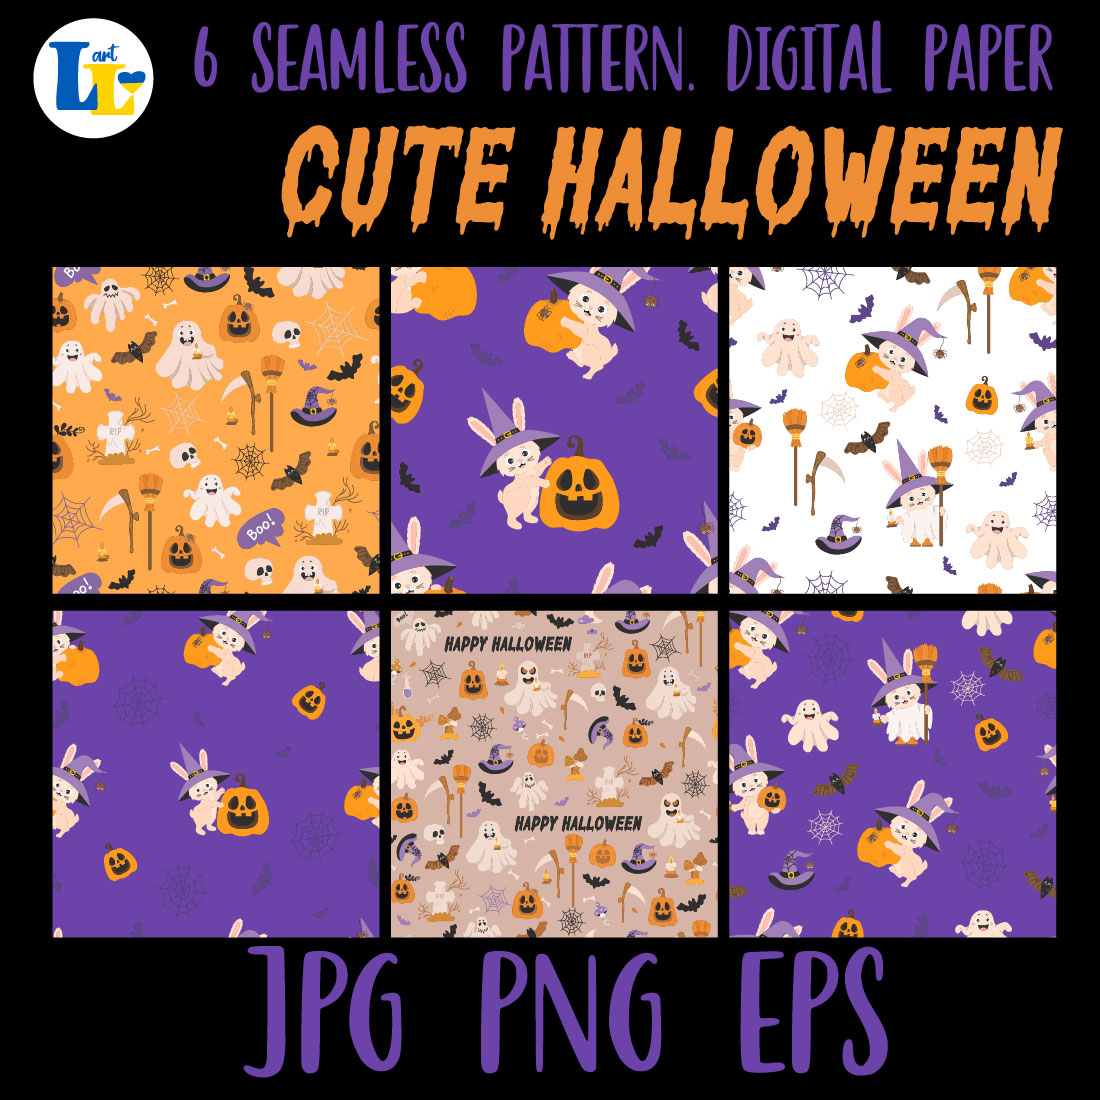 Halloween Seamless Pattern. Digital Paper Cute Halloween cover image.